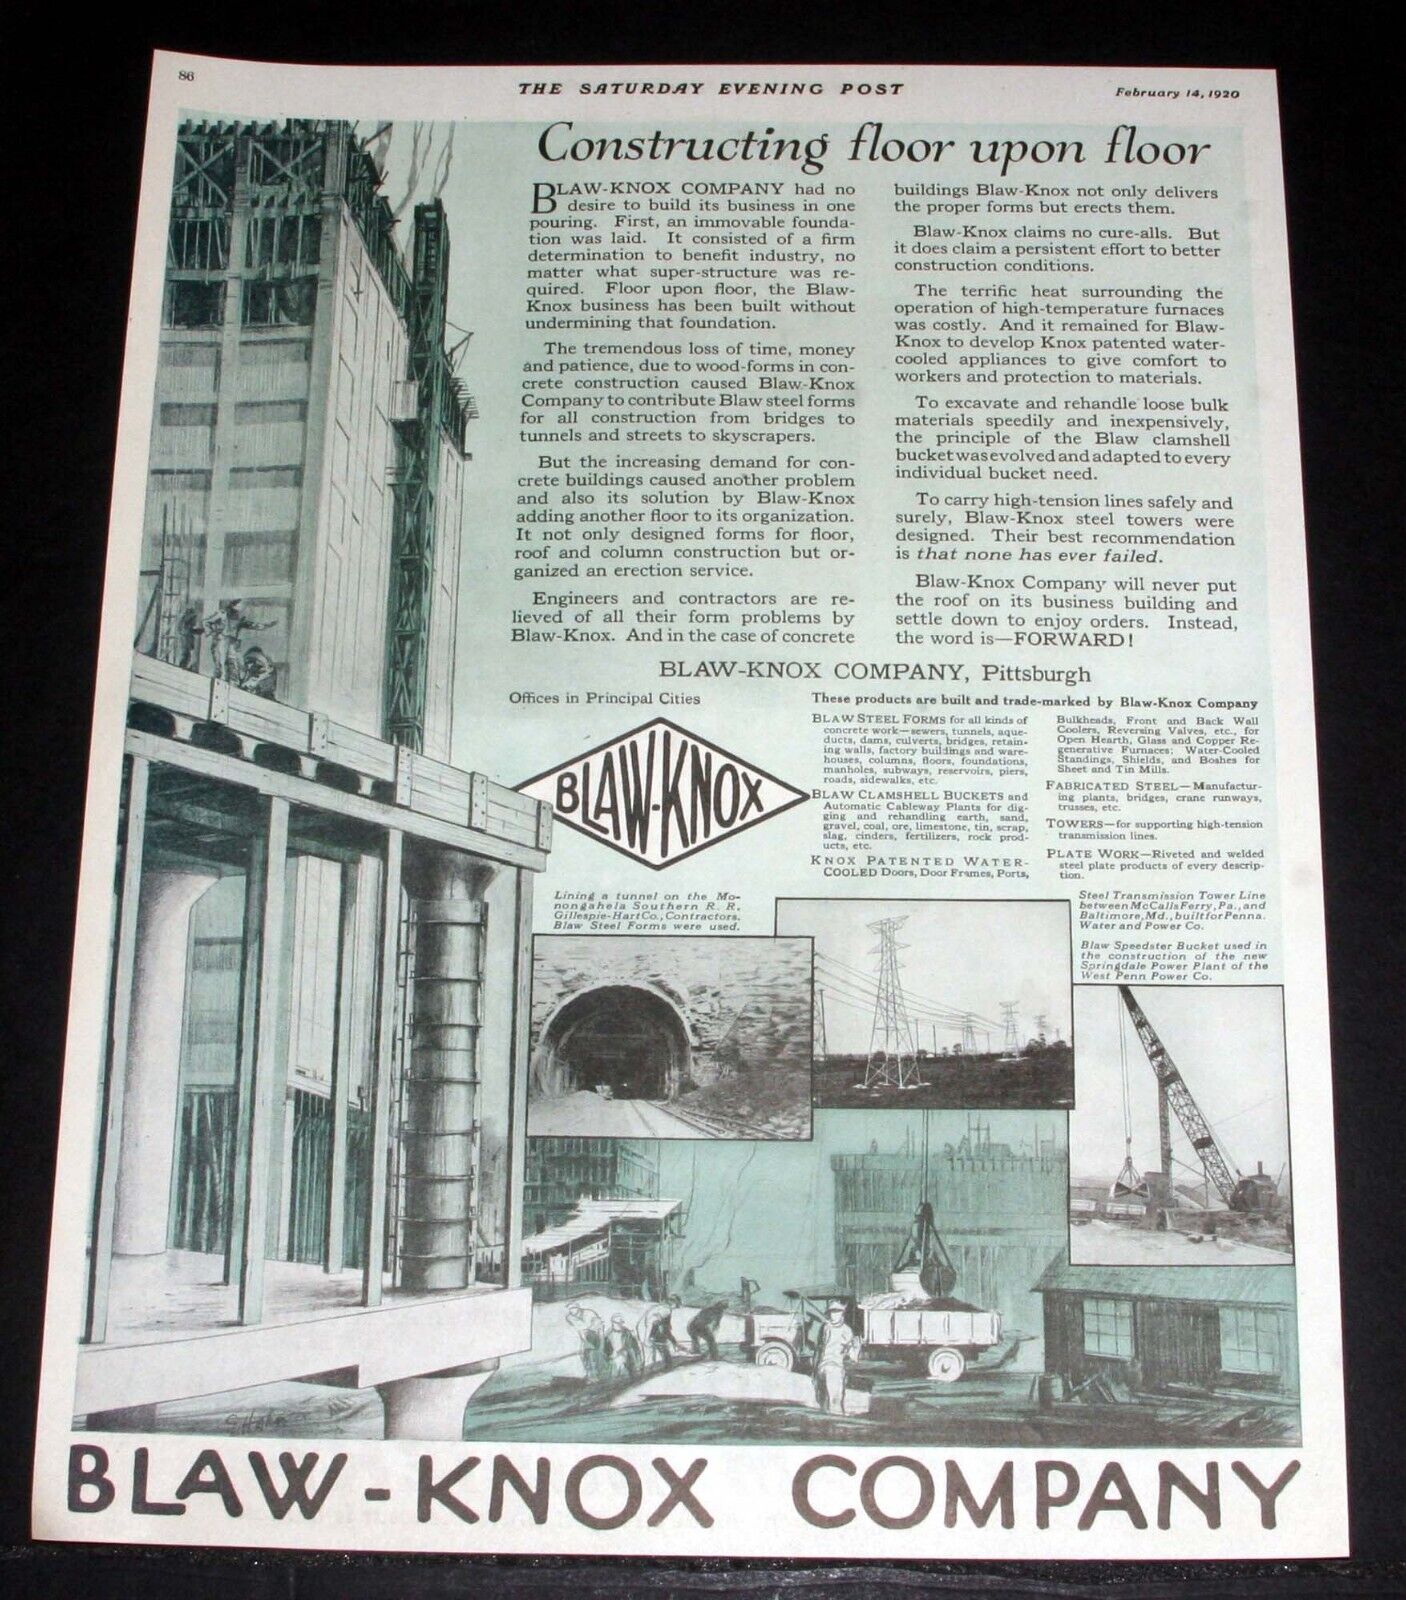 1920 OLD MAGAZINE PRINT AD, BLAW-KNOS COMPANY, CONSTRUCTING FLOOR UPON FLOOR